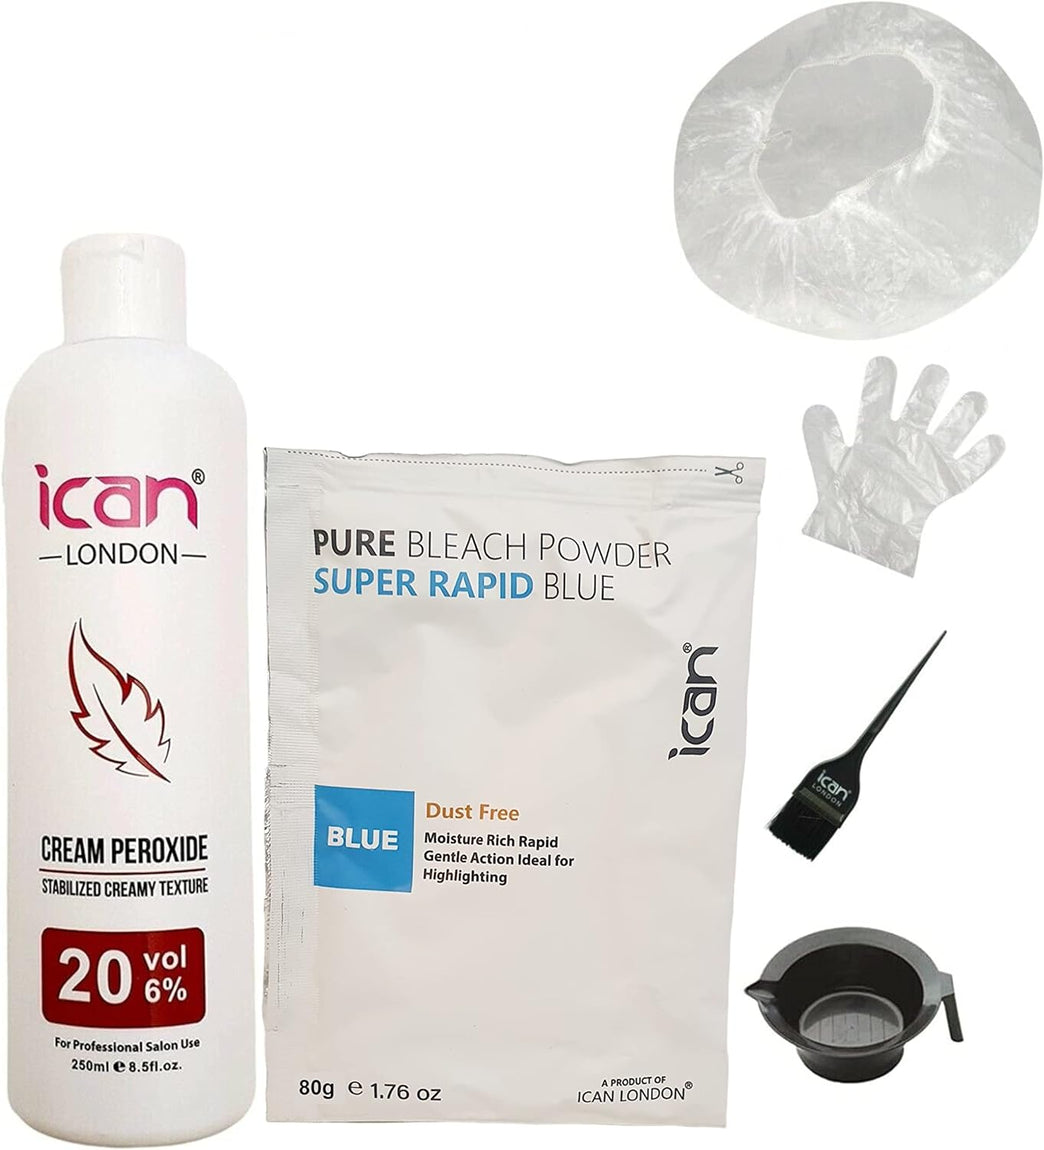 Complete Blonde Hair Bleaching Kit with Cream Peroxide 20 Vol 250ml + Blue Powder Bleach 80g + Essential Tools